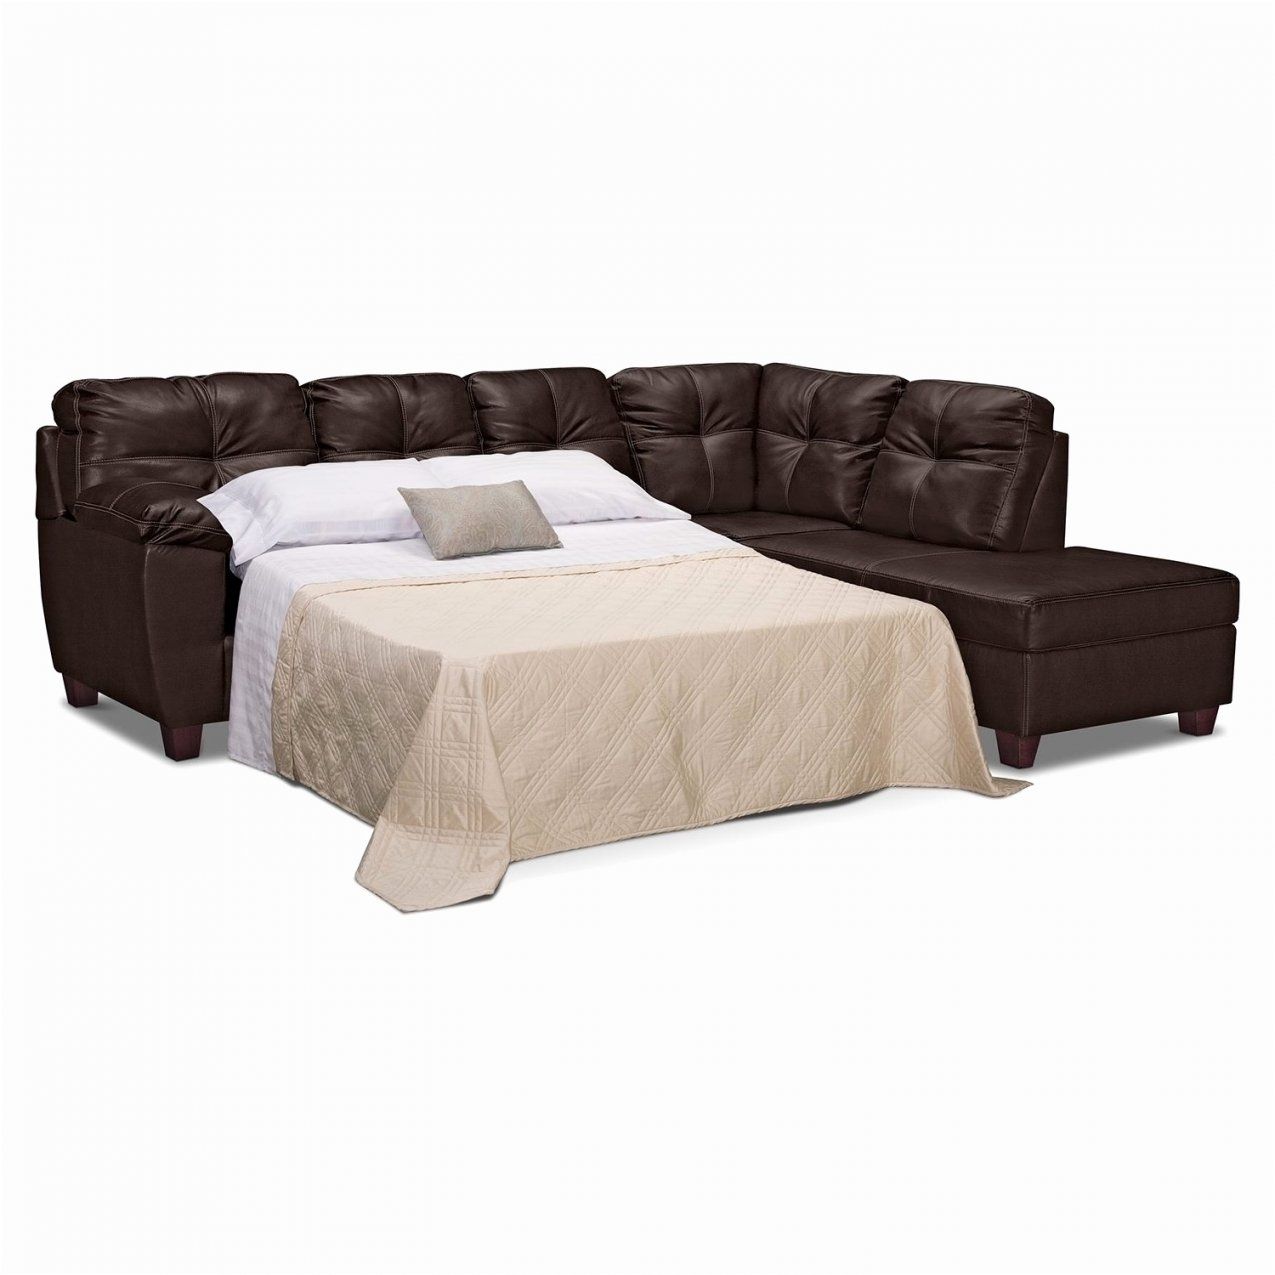 Sleeper Sofa Ikea Sectional Sofa Bed Fabric Sectional With Leather Within Ikea Sectional Sleeper Sofas 